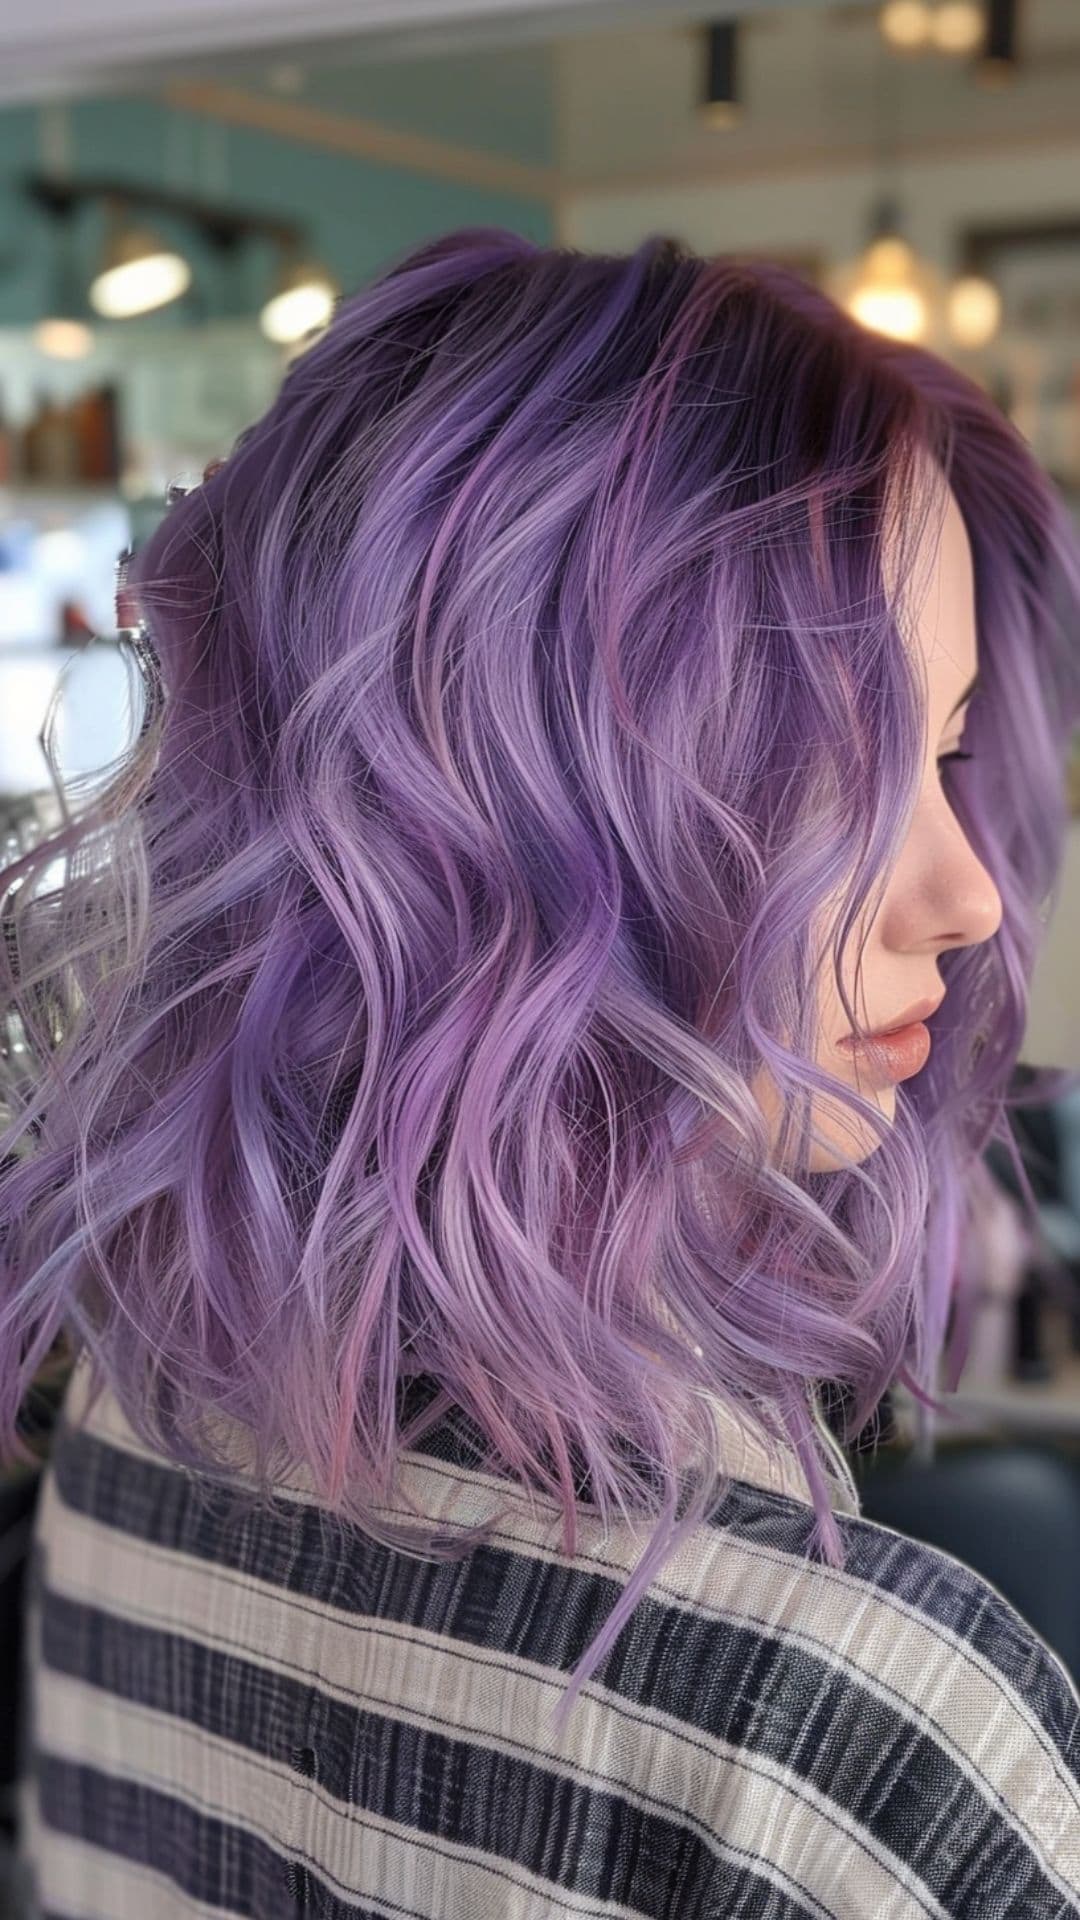 A woman modelling a bright lavender hair.